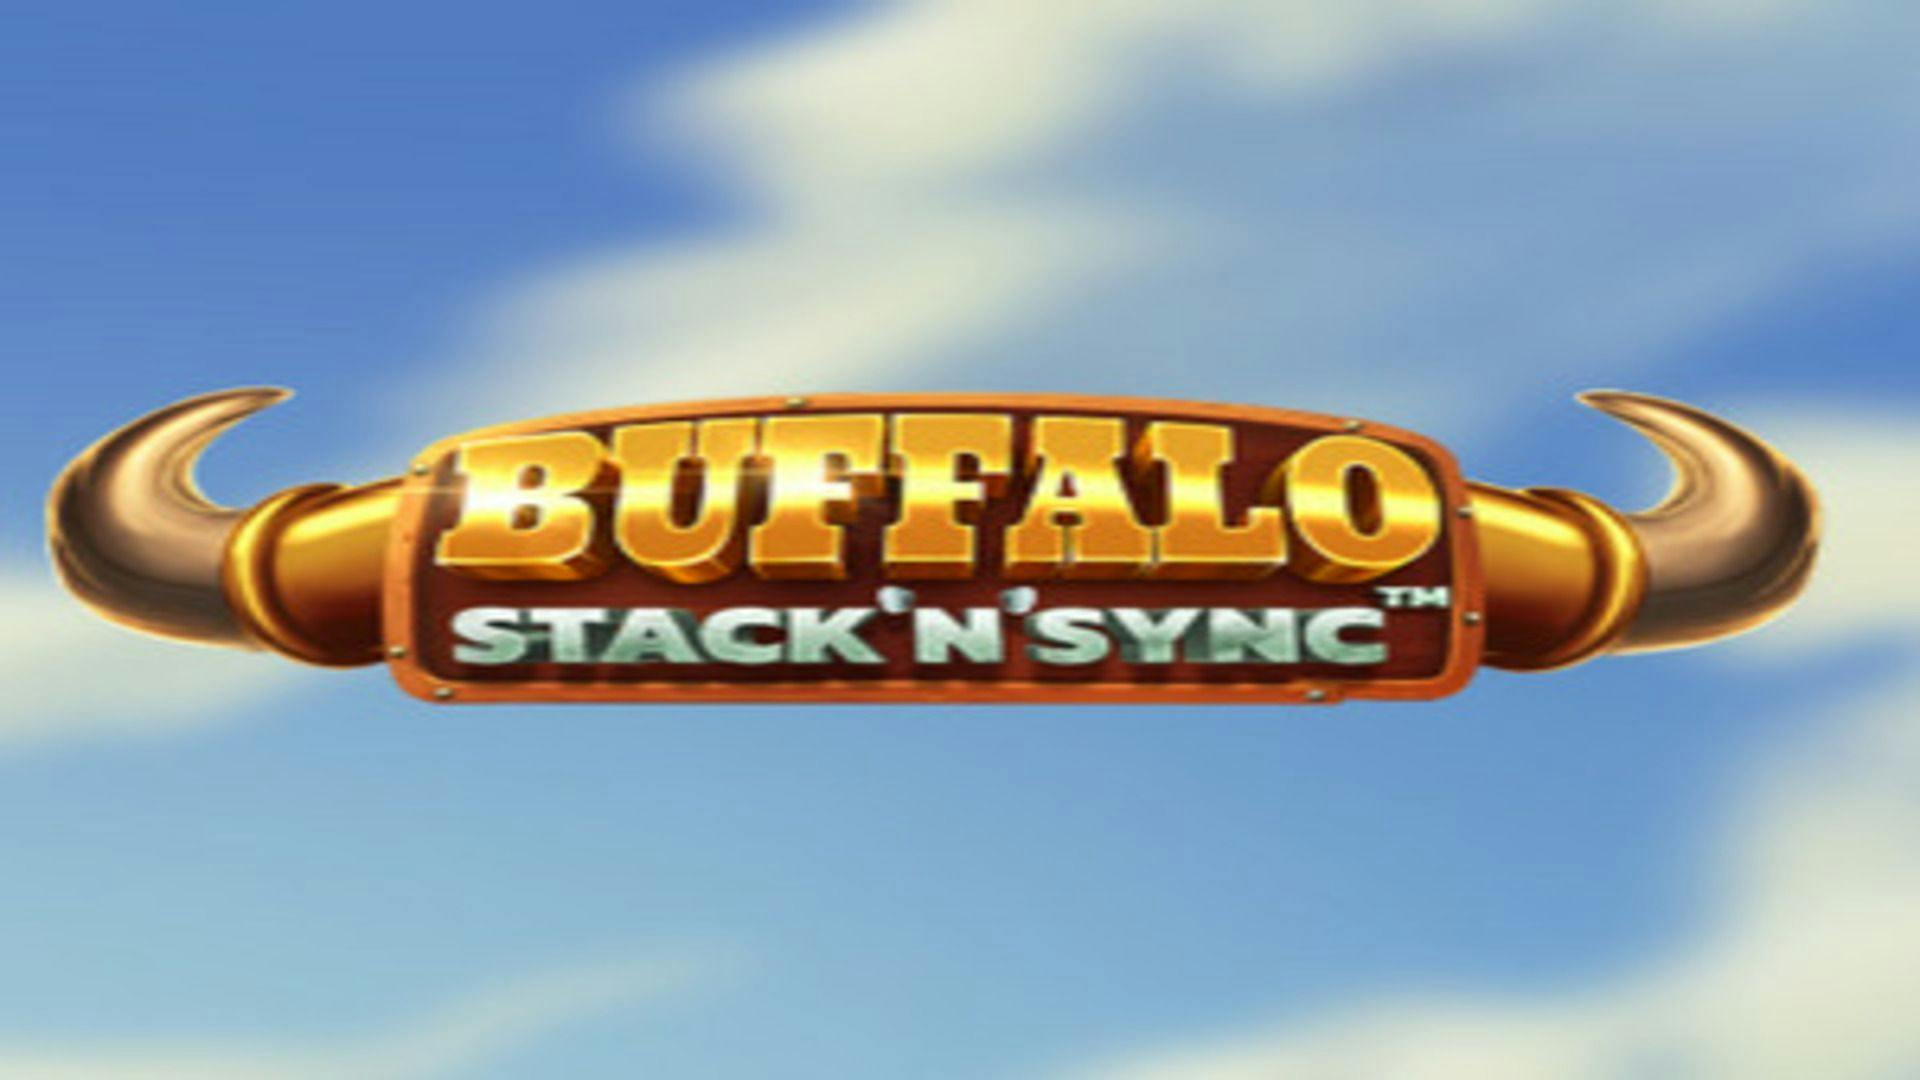 Buffalo Stack' n' Sync Slot Machine Online Free Game Play